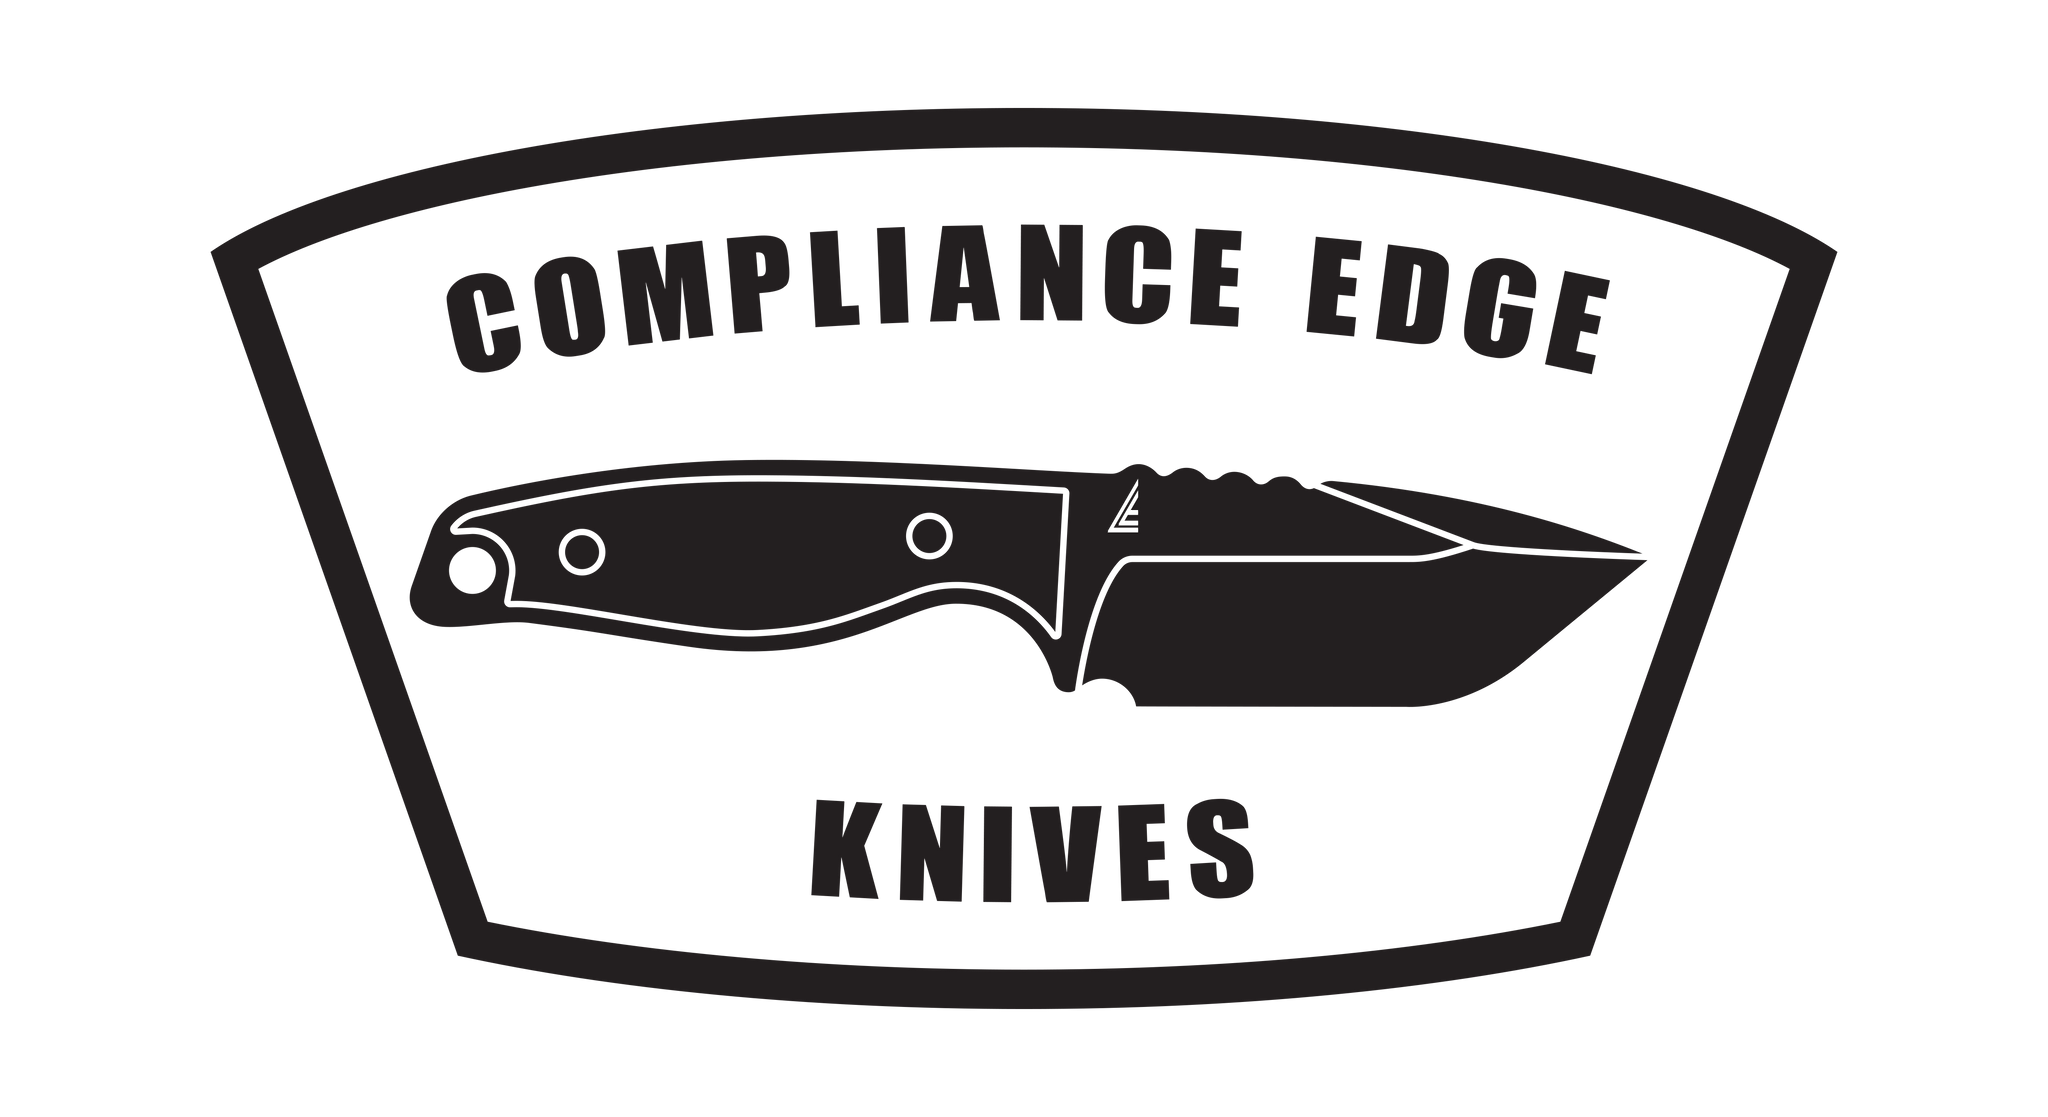 Compliance Edge Knives